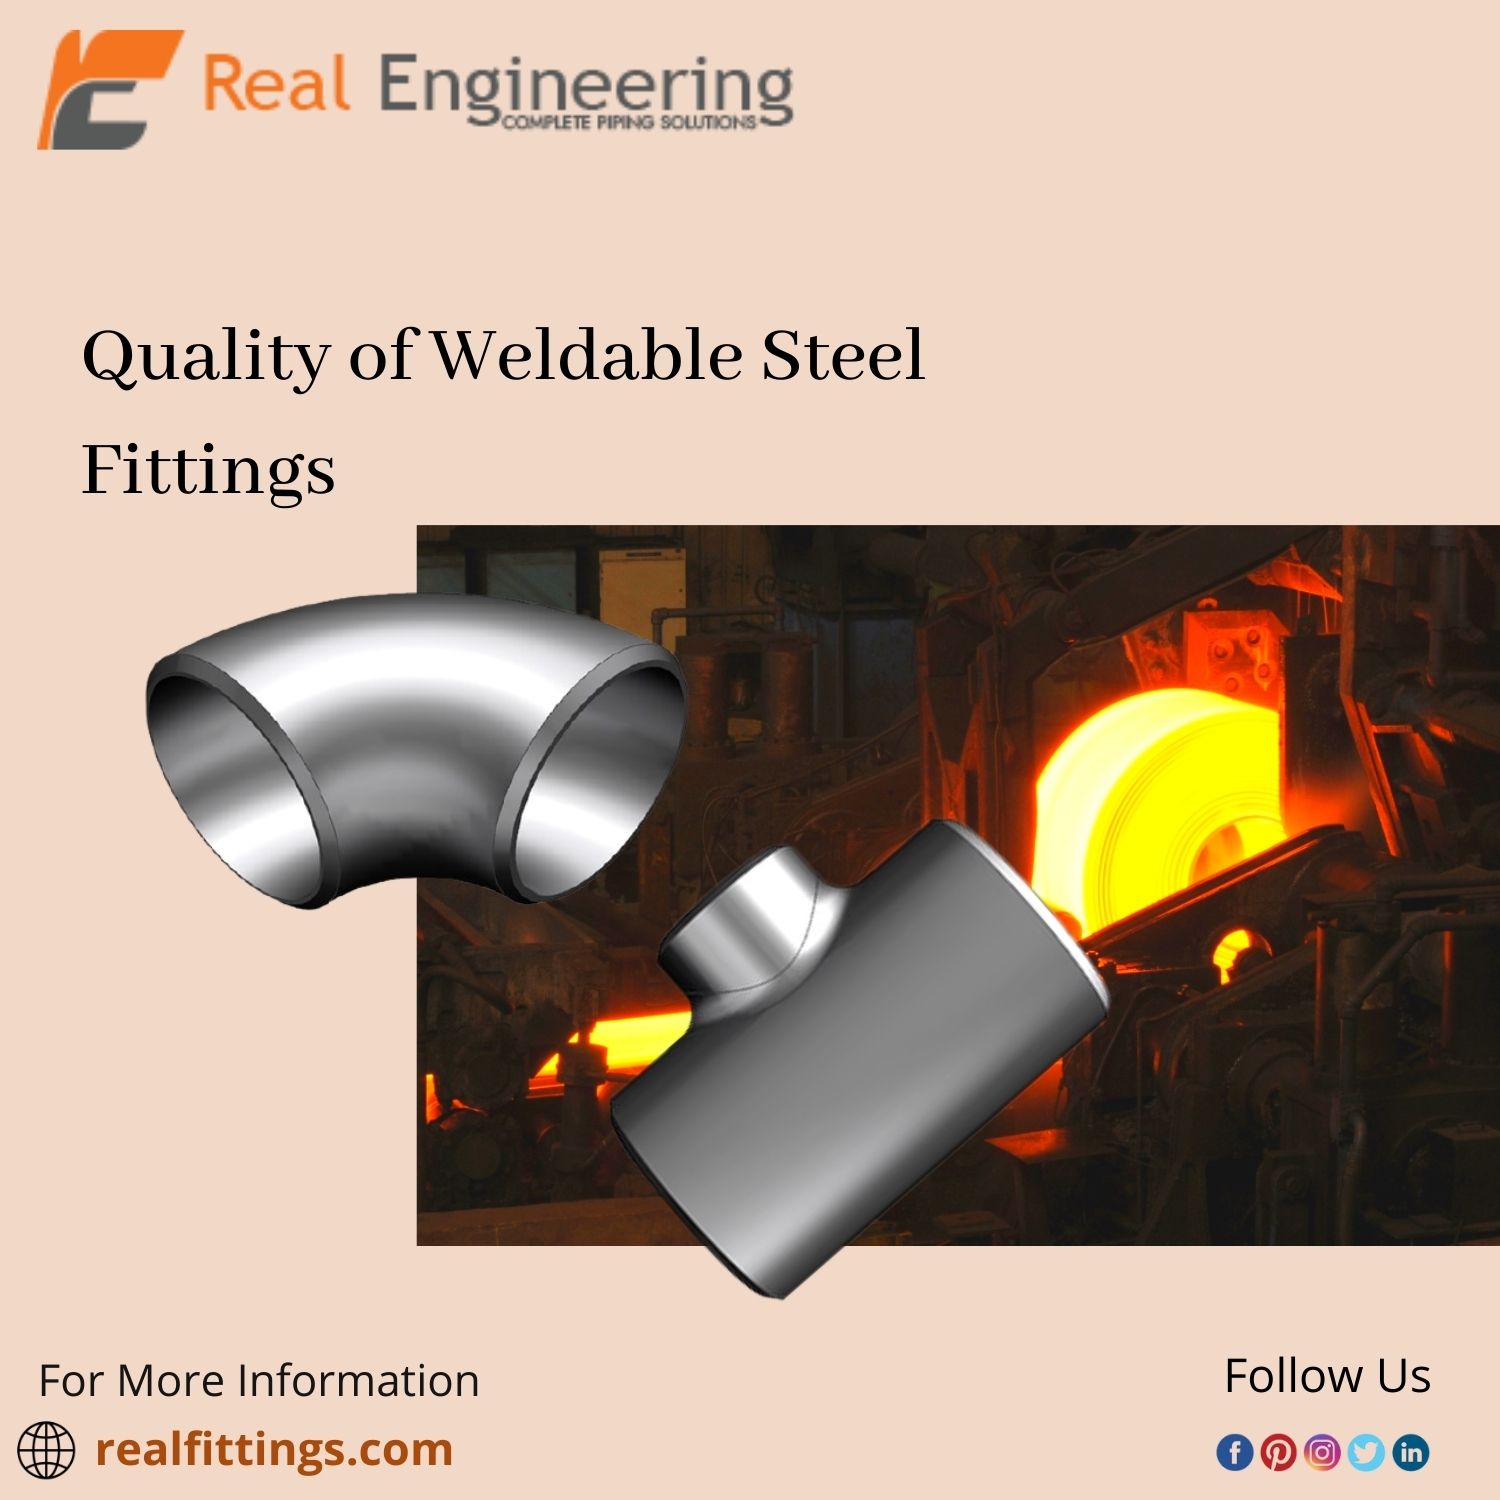 Weldable steel fittings